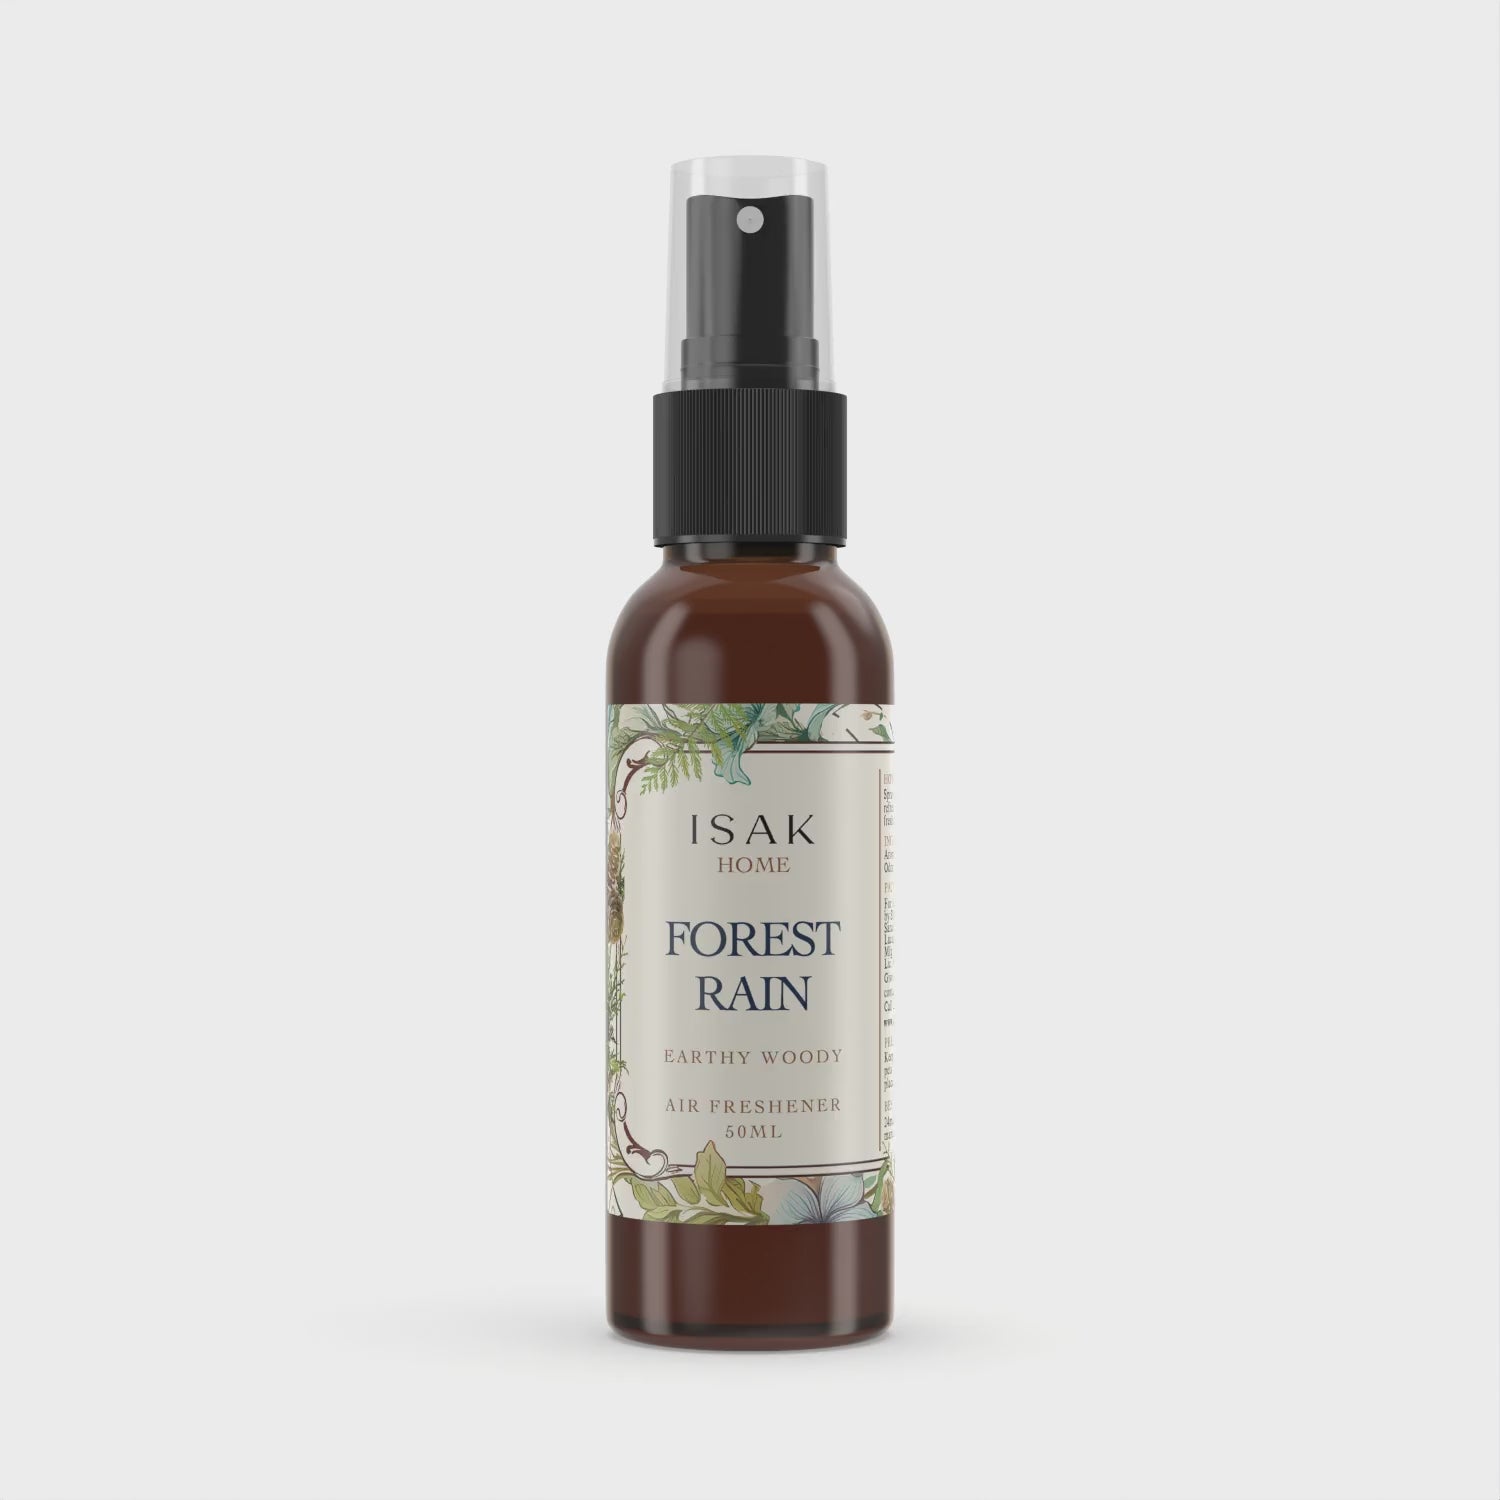 Forest rain Air Freshener home scent